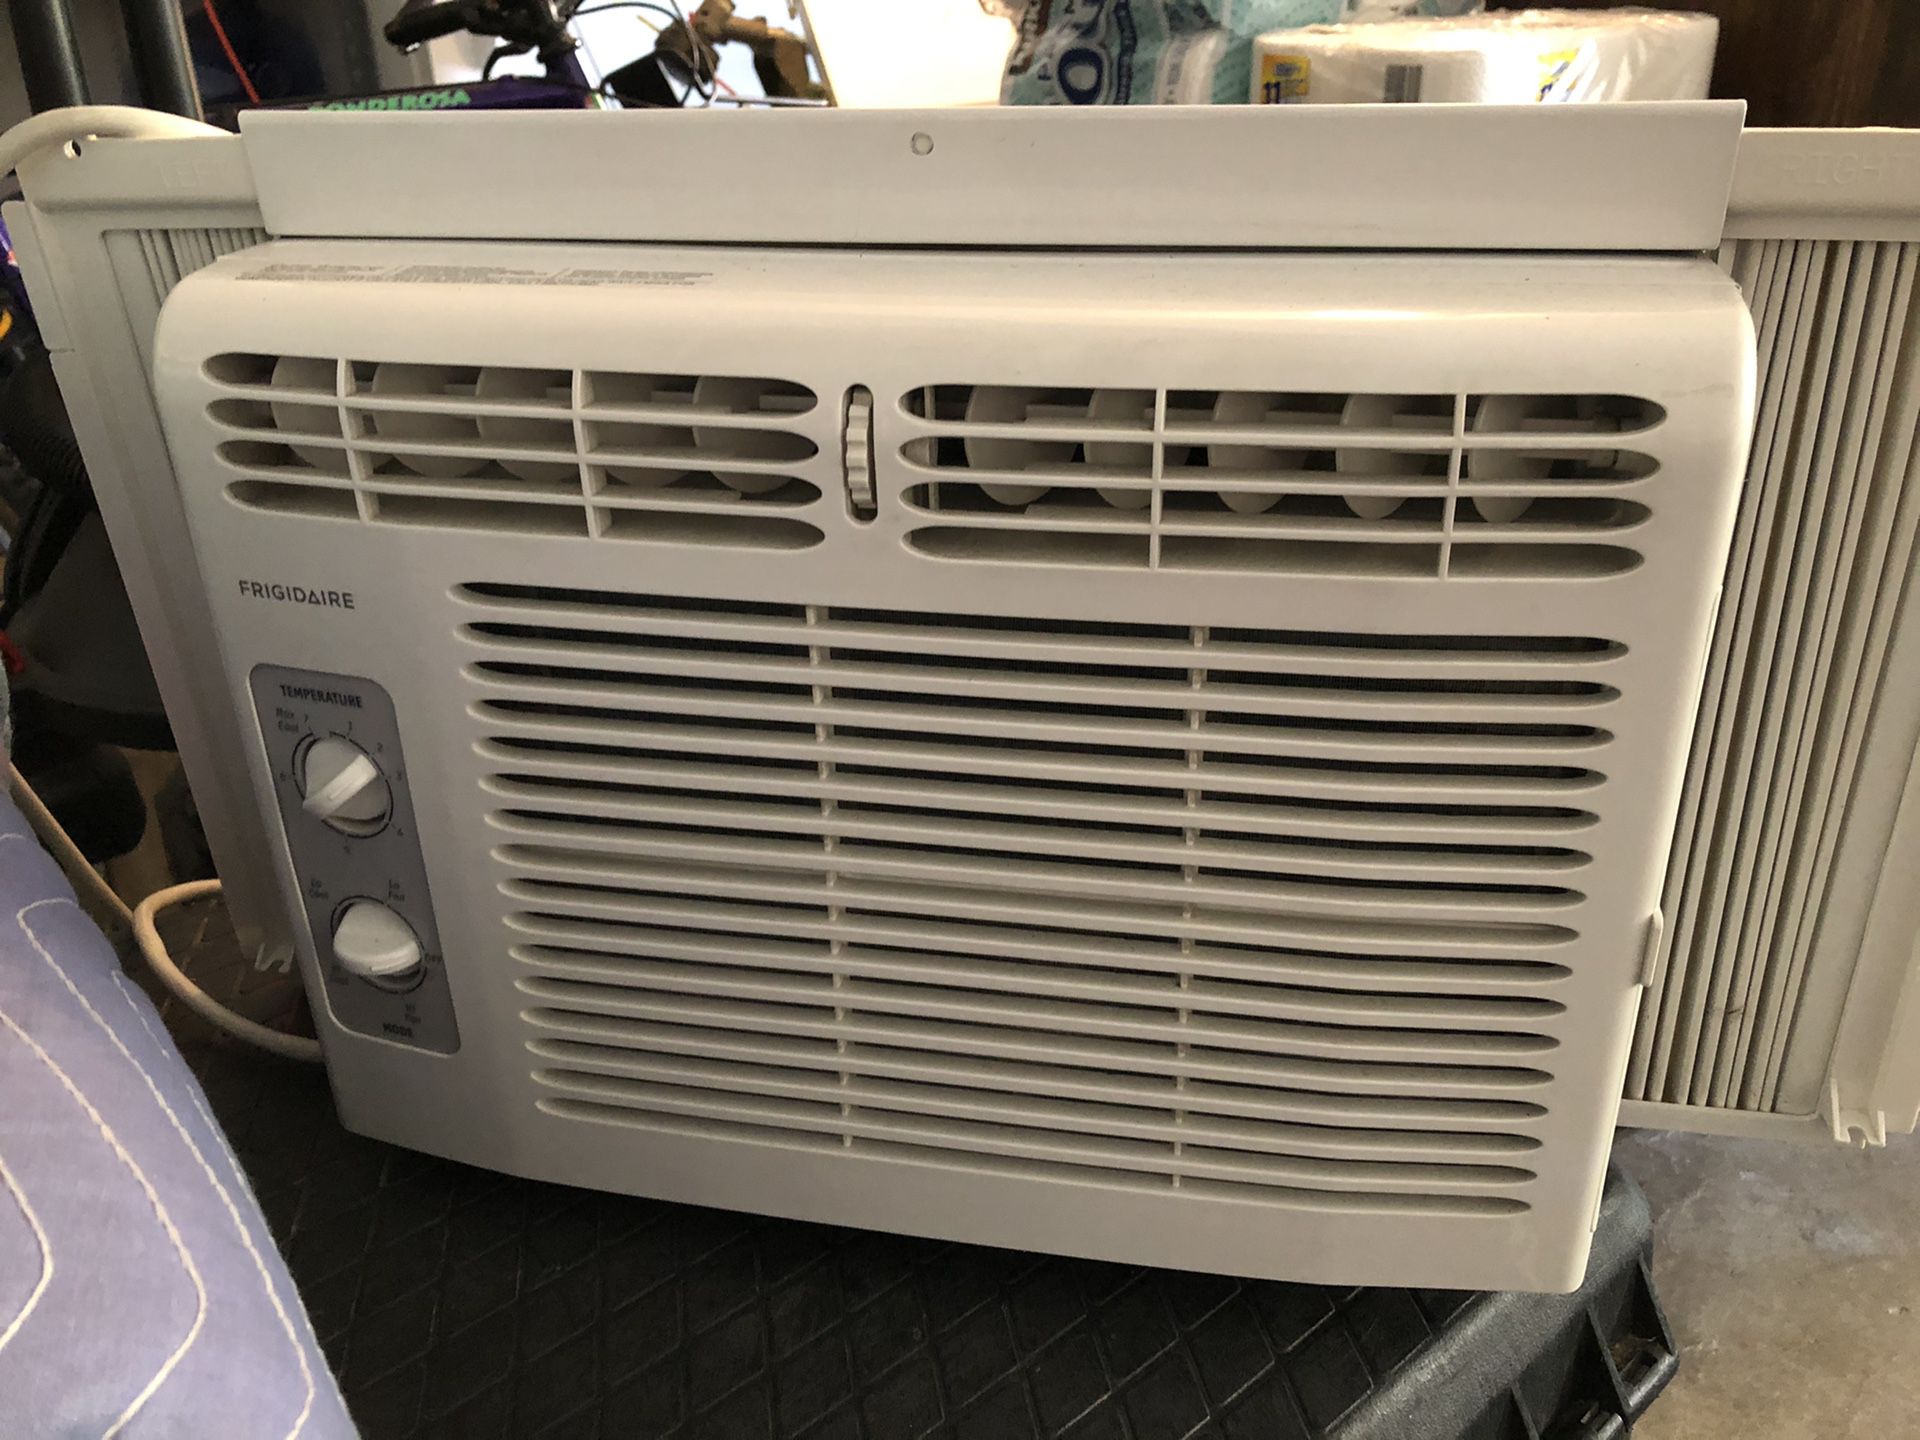 Frigidaire basic window AC small room air conditioner 150sqft 5000BTU